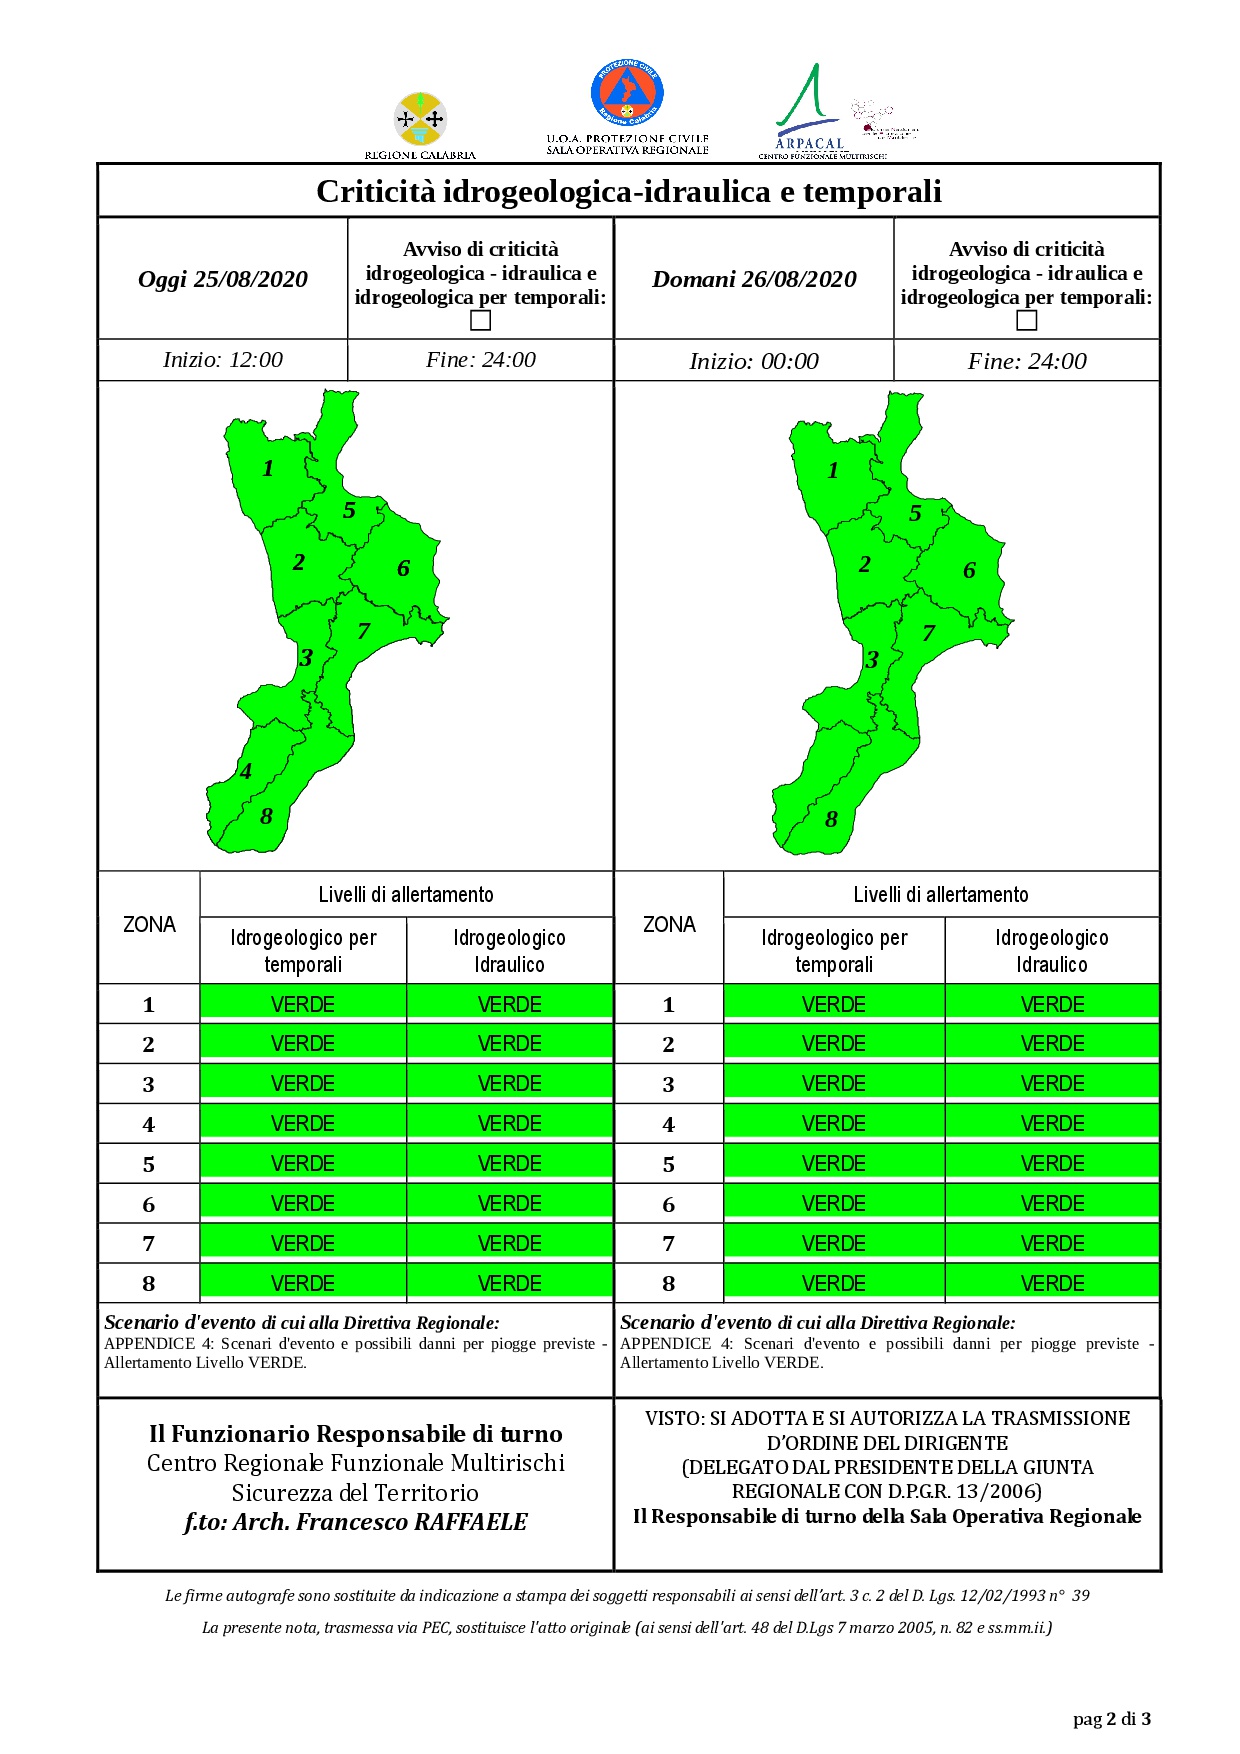 Criticità idrogeologica-idraulica e temporali in Calabria 25-08-2020